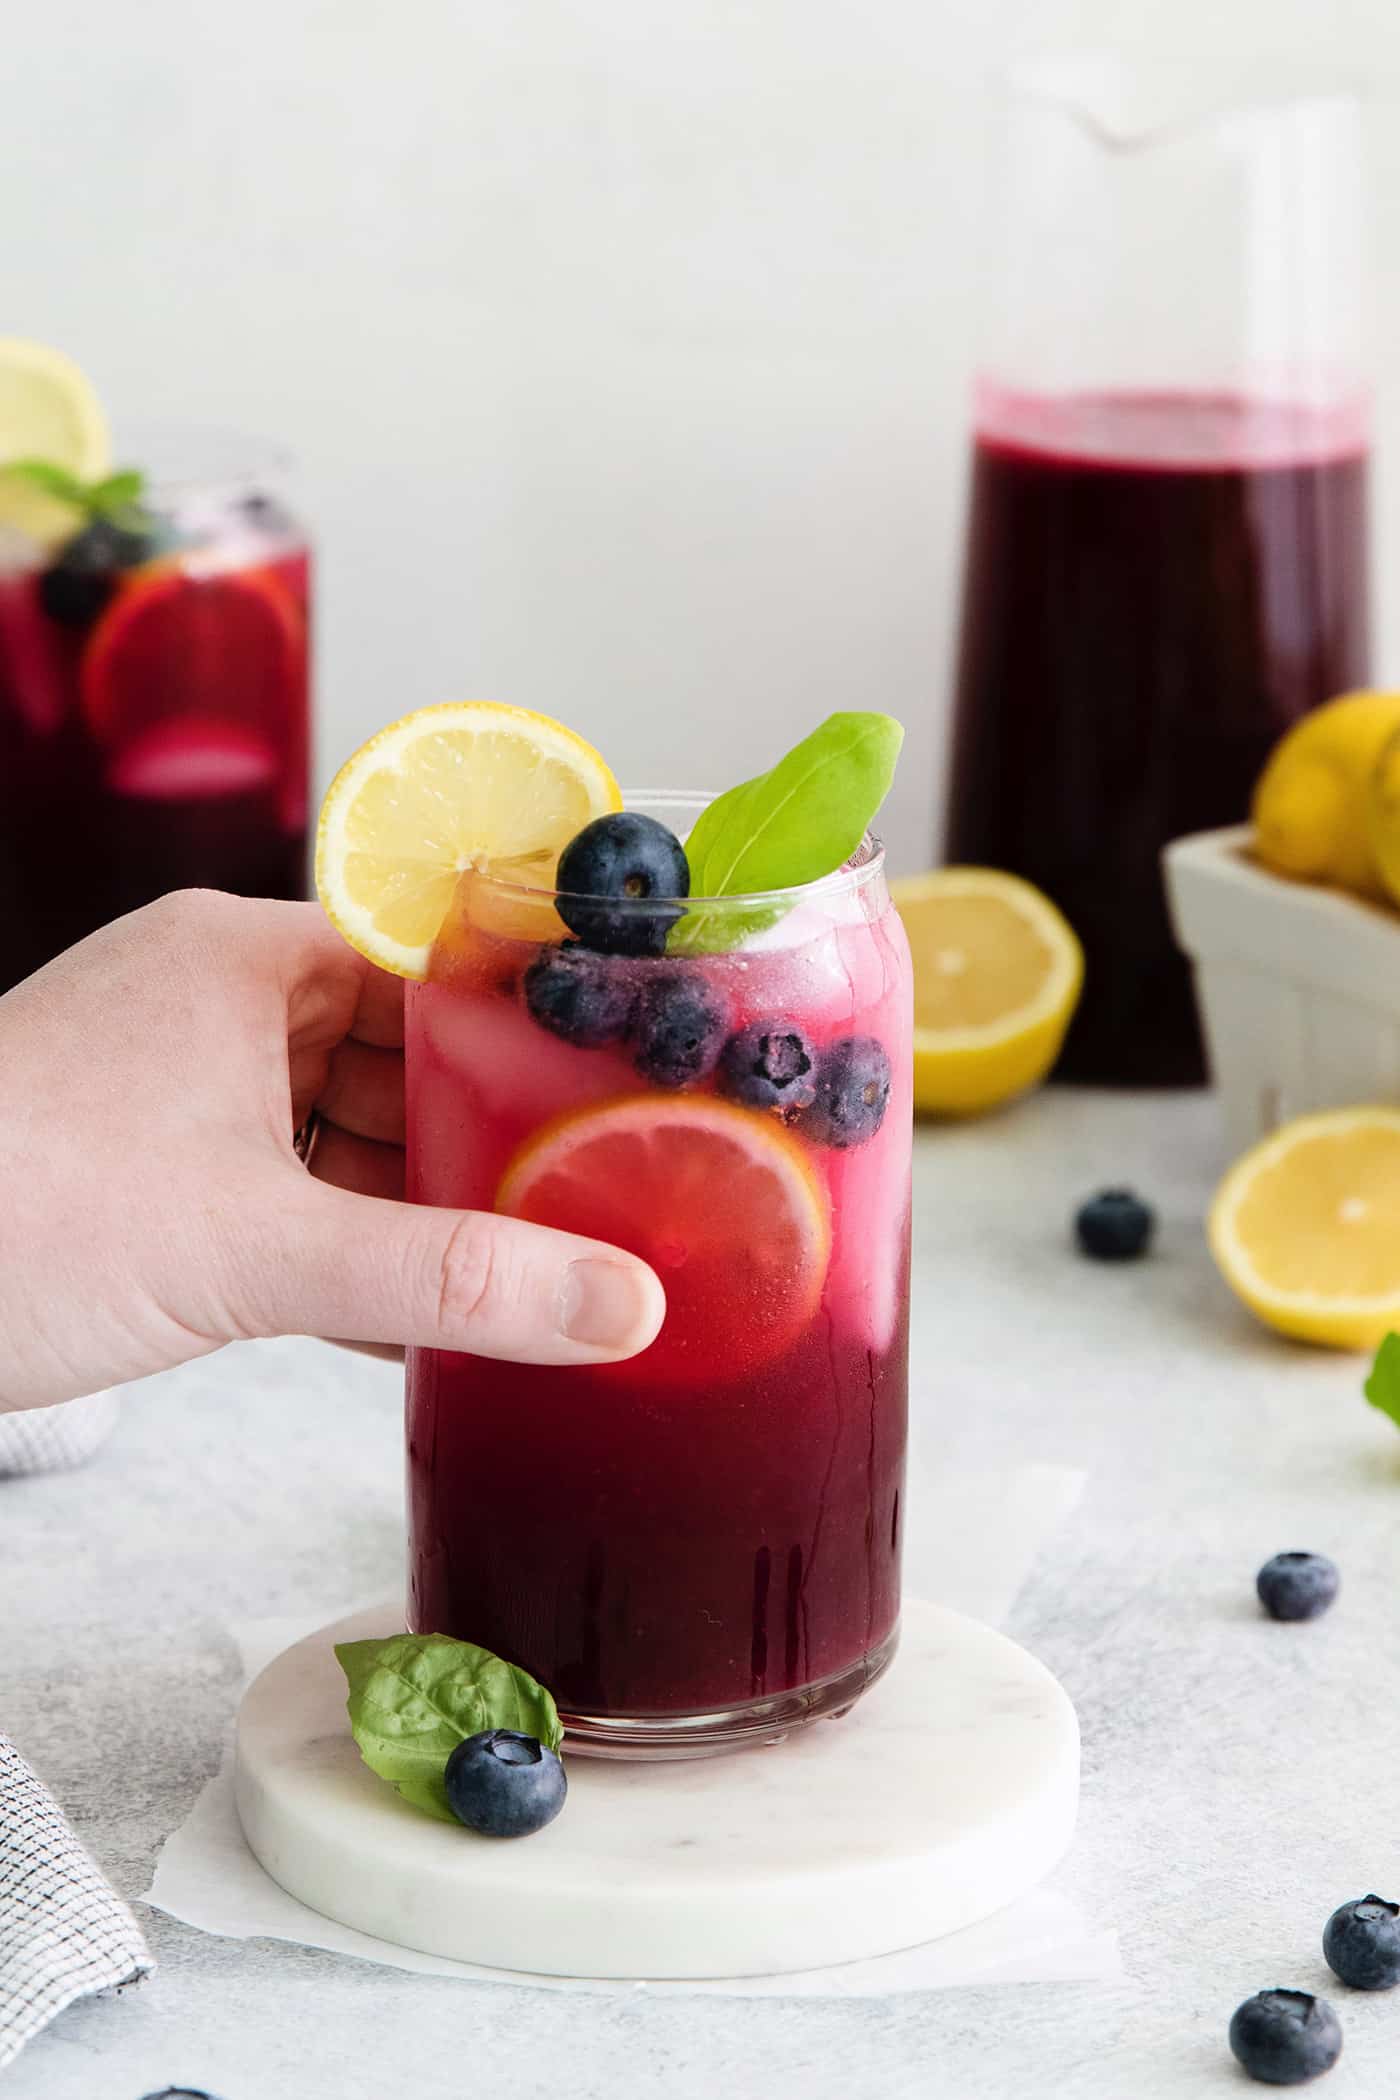 A hand holding a blueberry lemonade